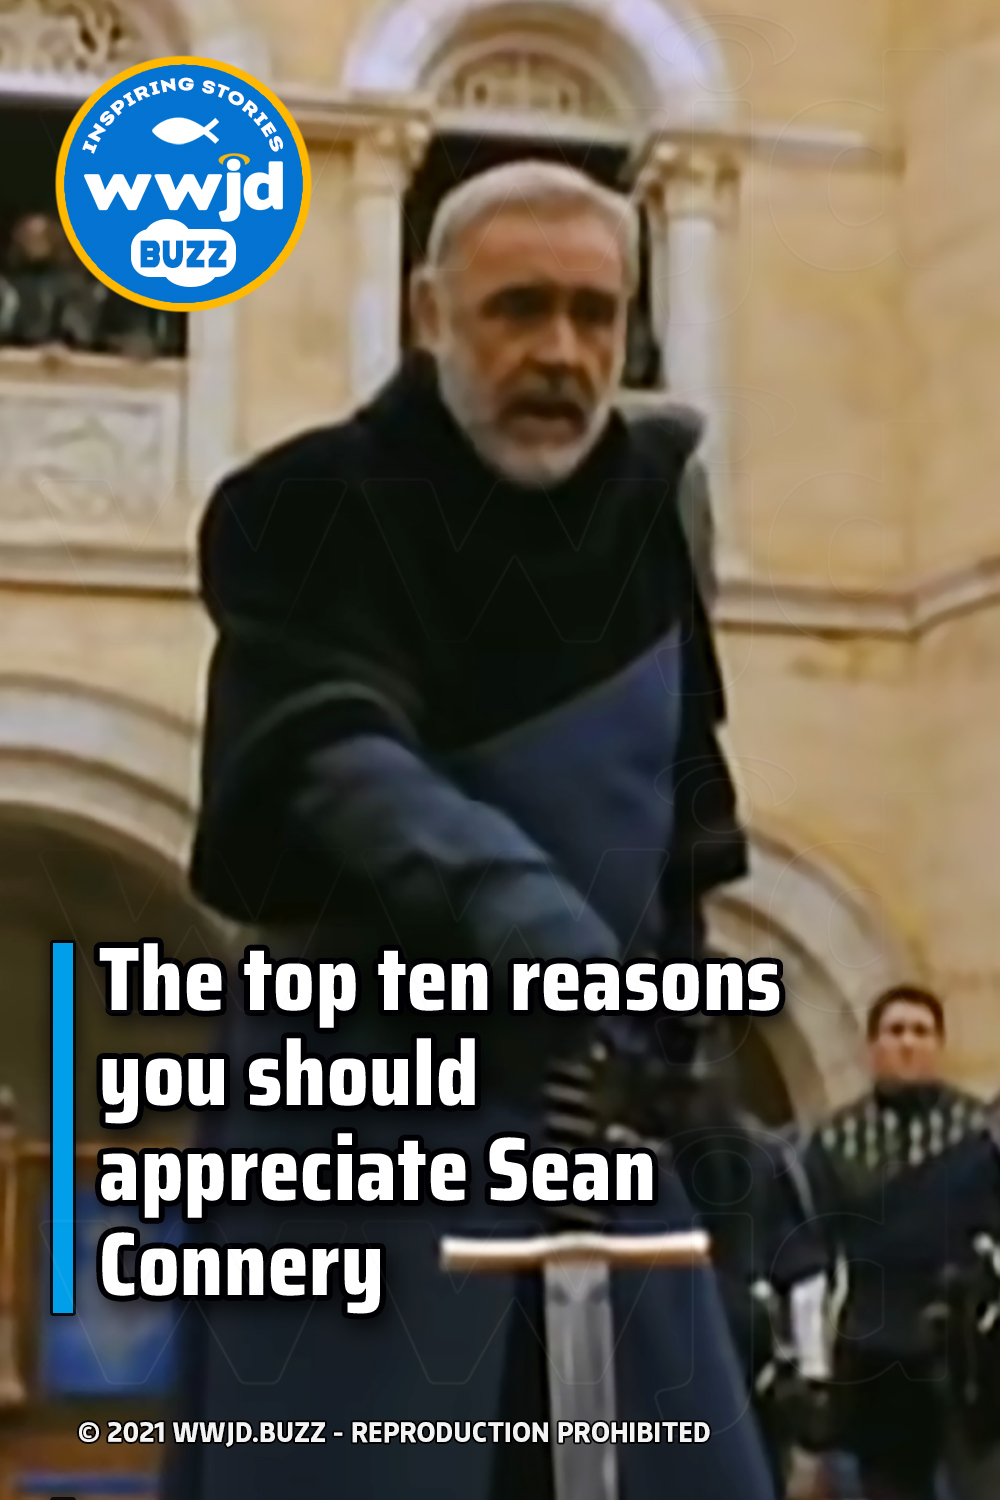 The top ten reasons you should appreciate Sean Connery